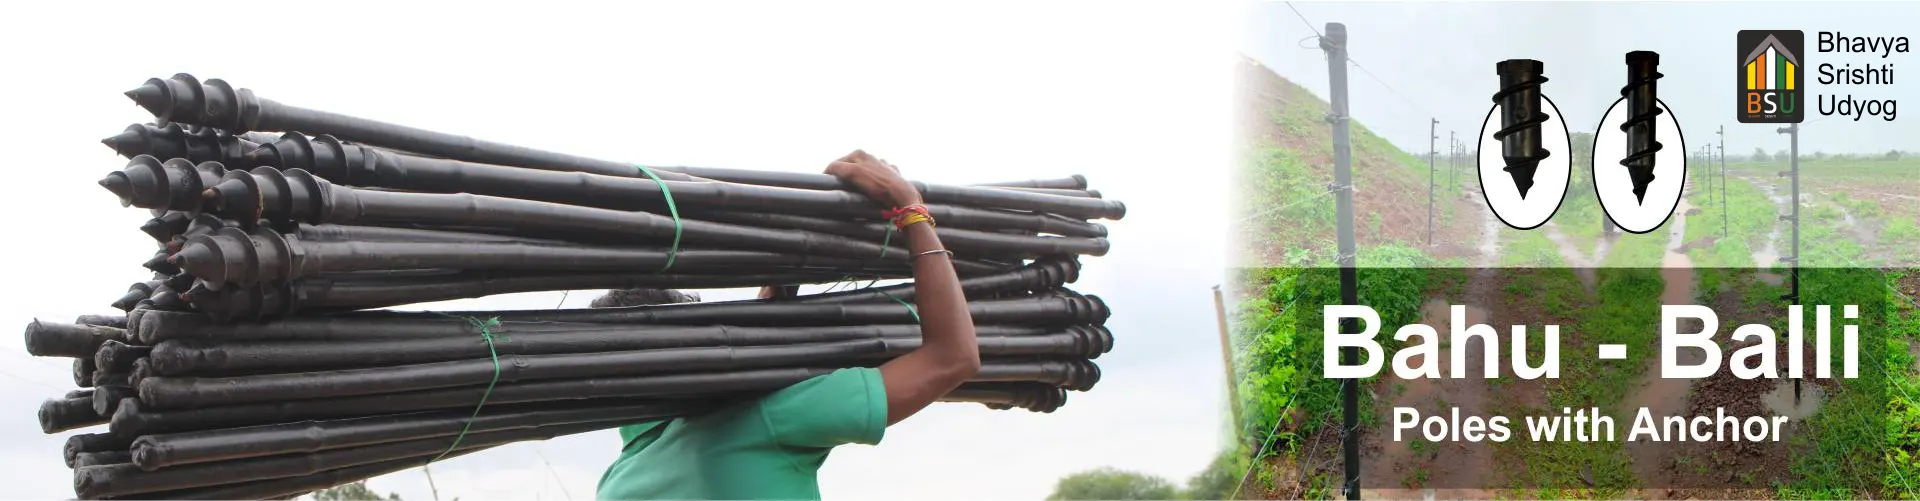 bamboo poles, Bahu-Balli Trellis Supports